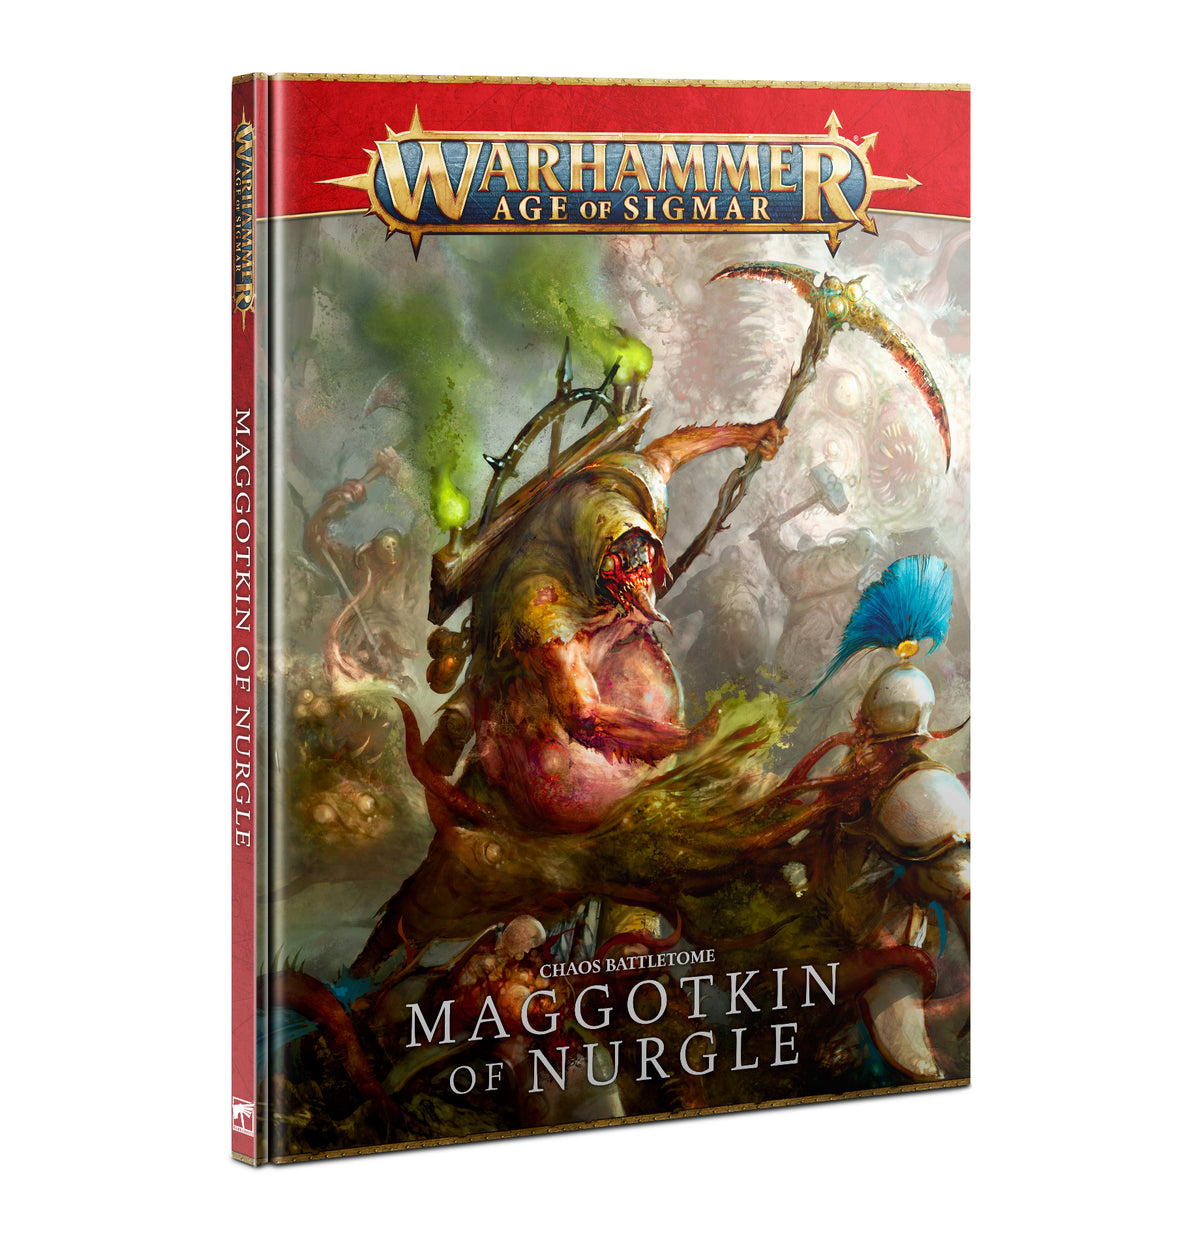 Battletome - Maggotkin of Nurgle (Warhammer Age of Sigmar)